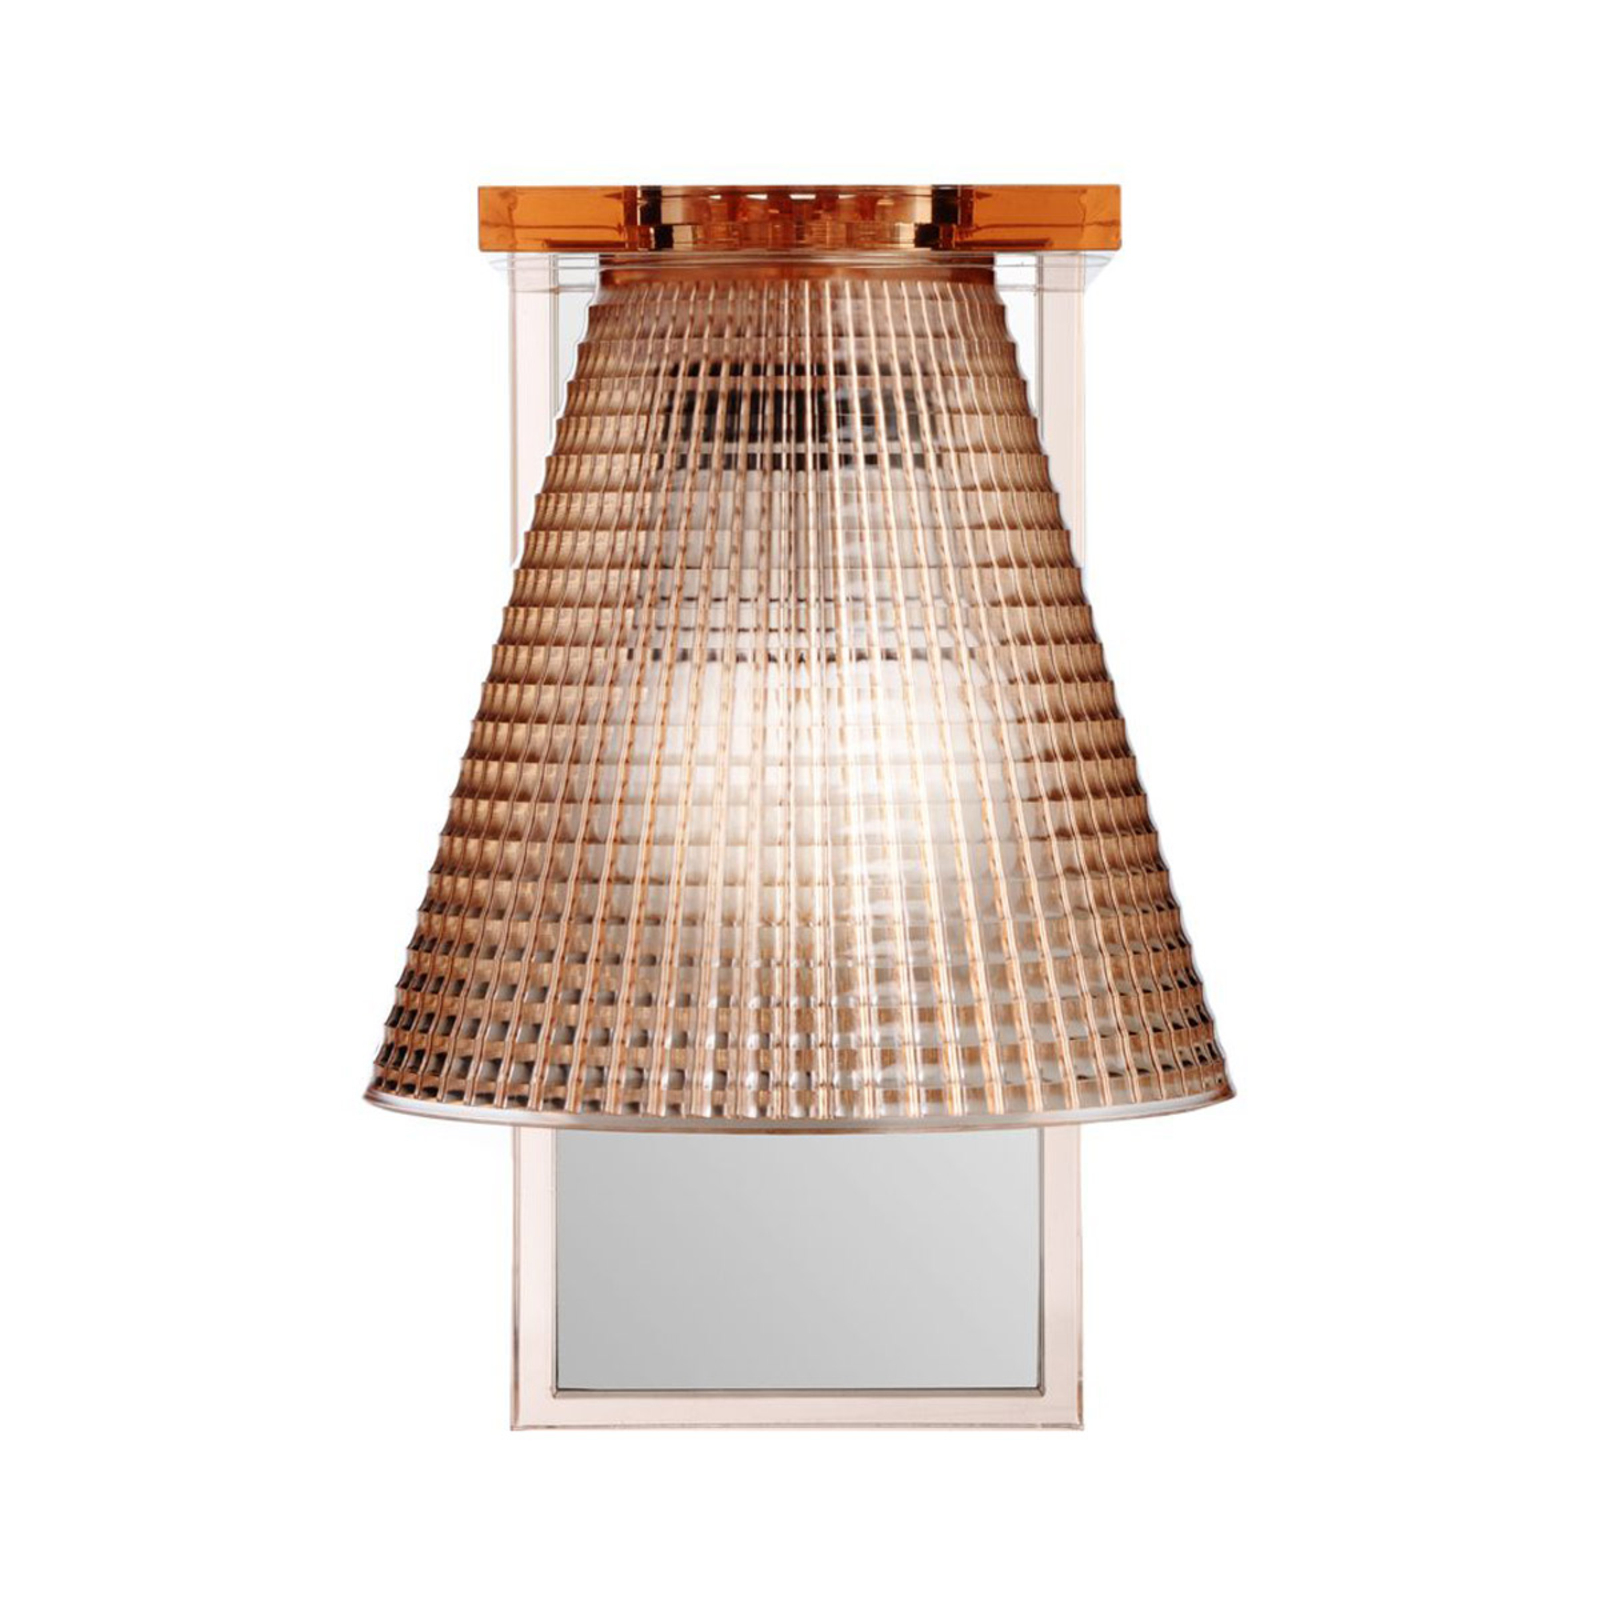 Kartell Light-Air LED sienas lampa, dzintara krāsā